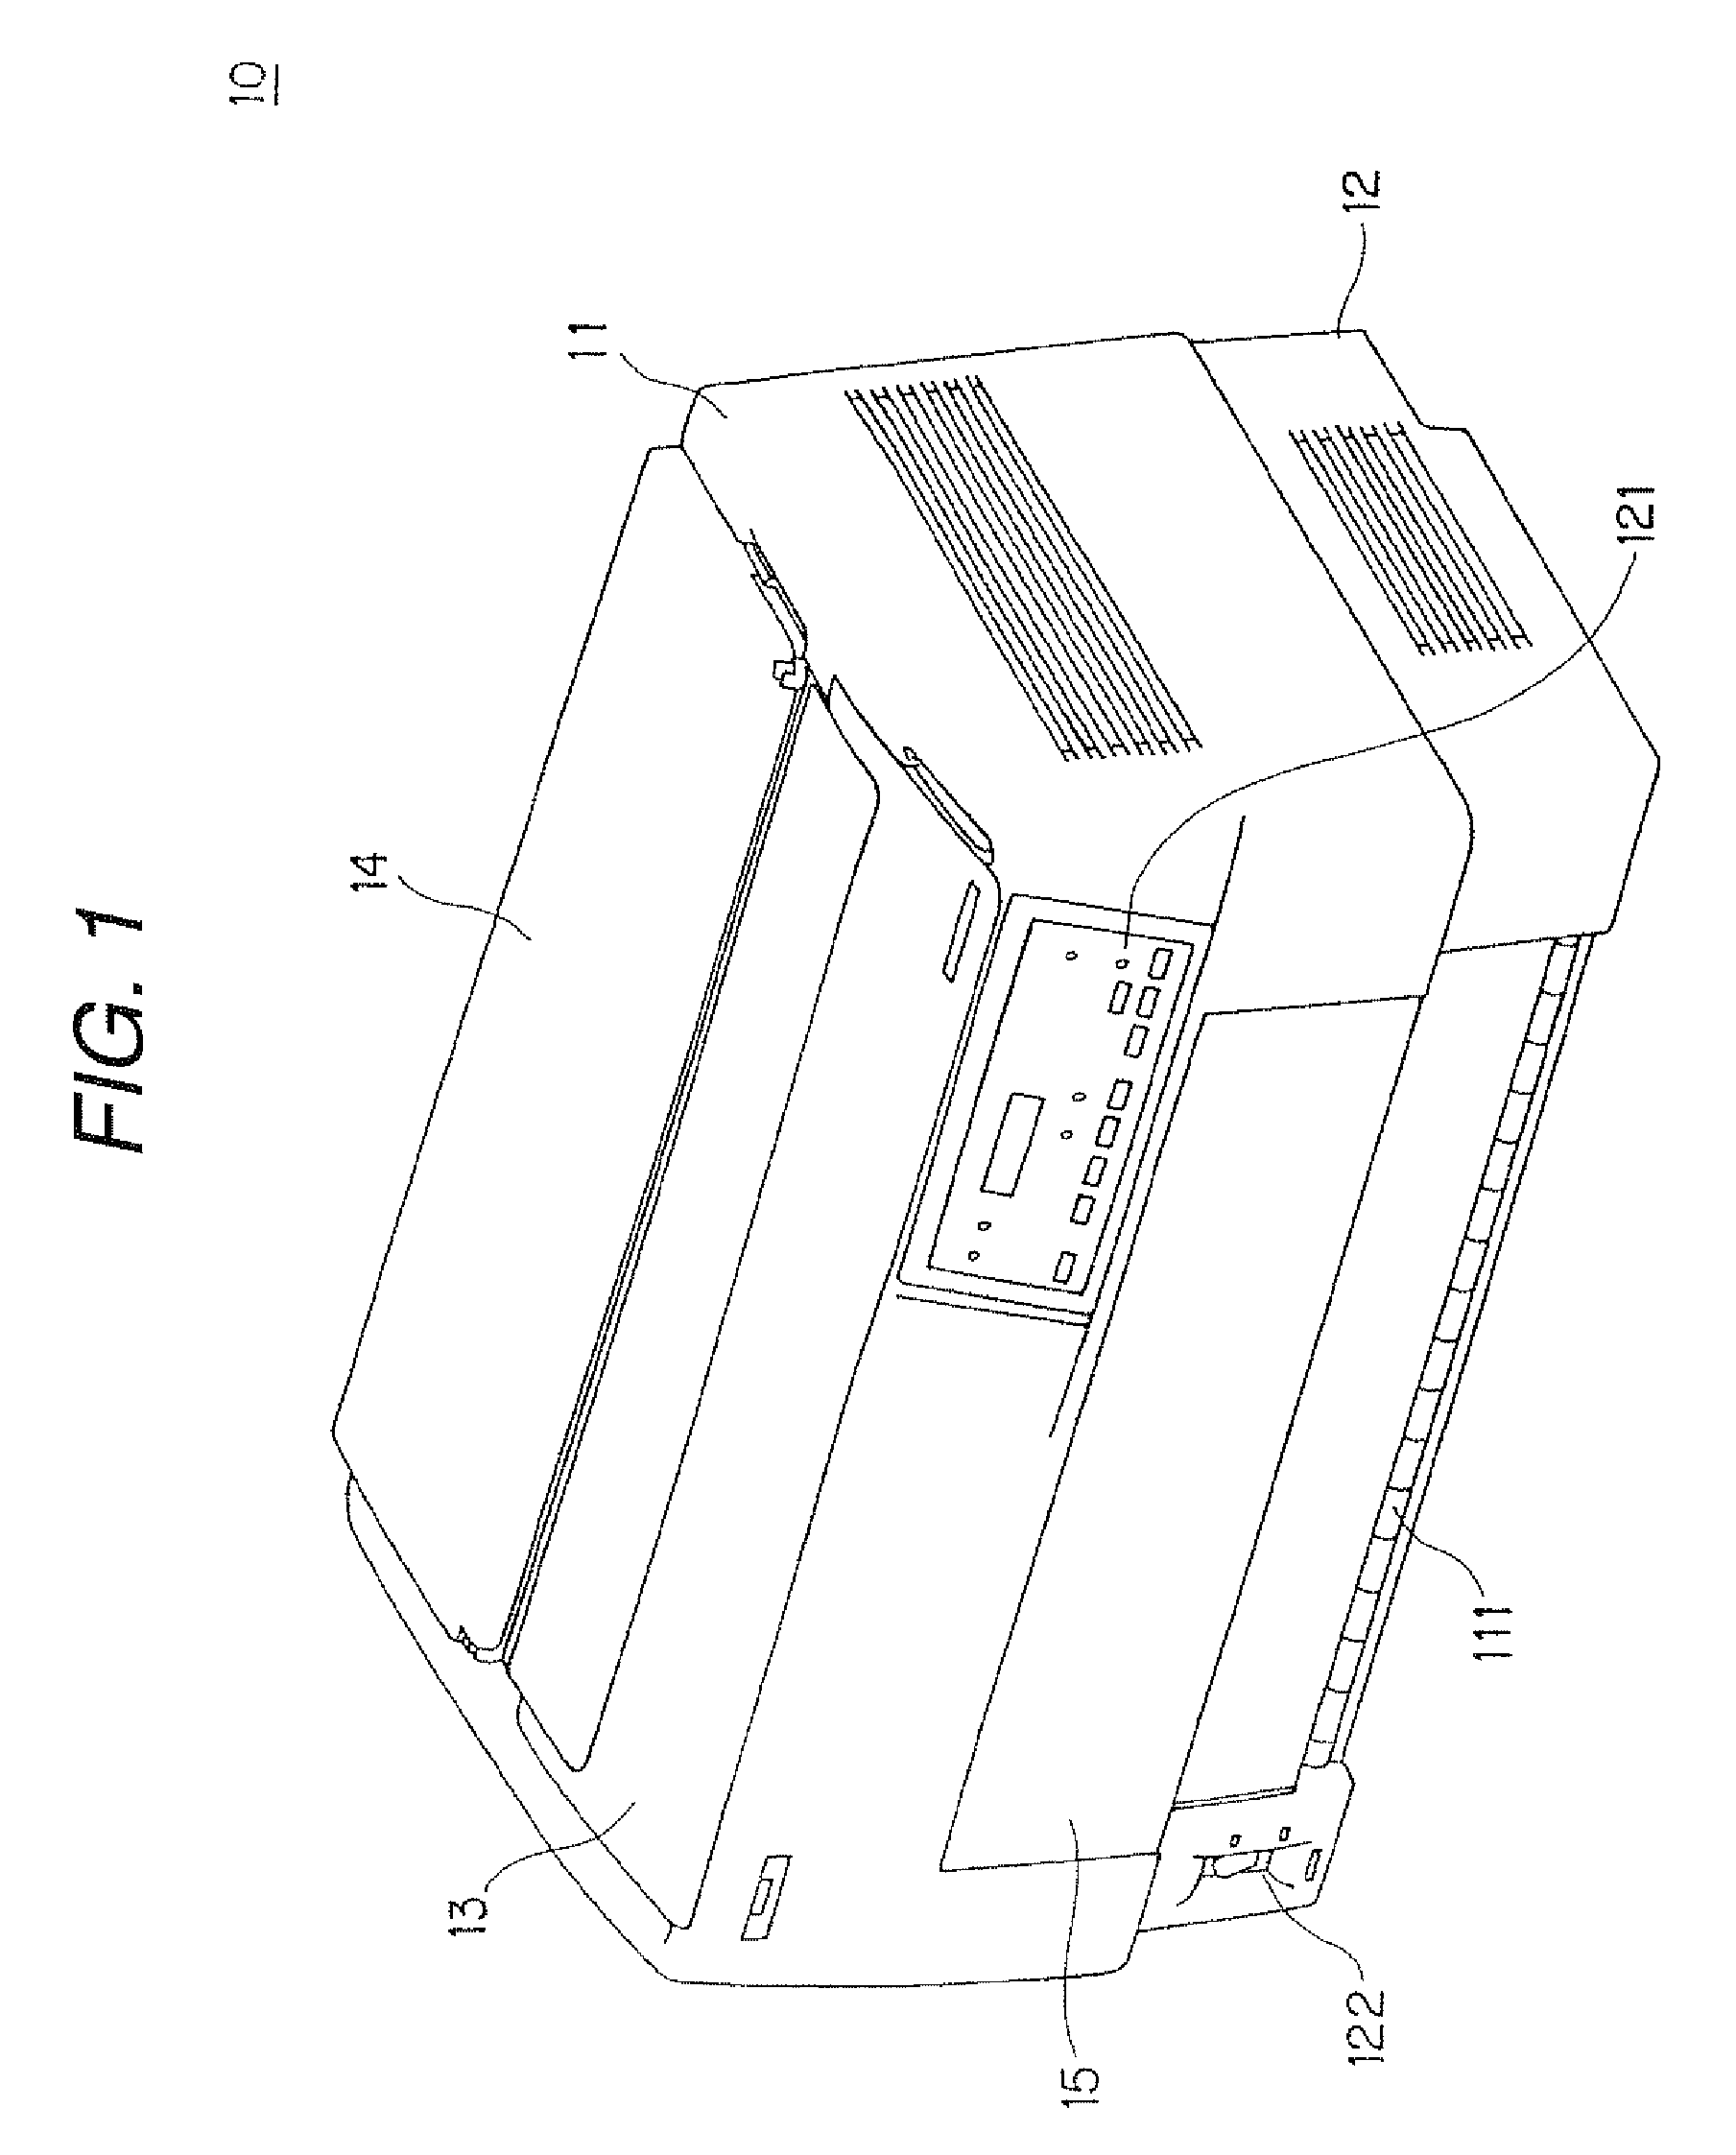 Ribbon cartridge and printing apparatus